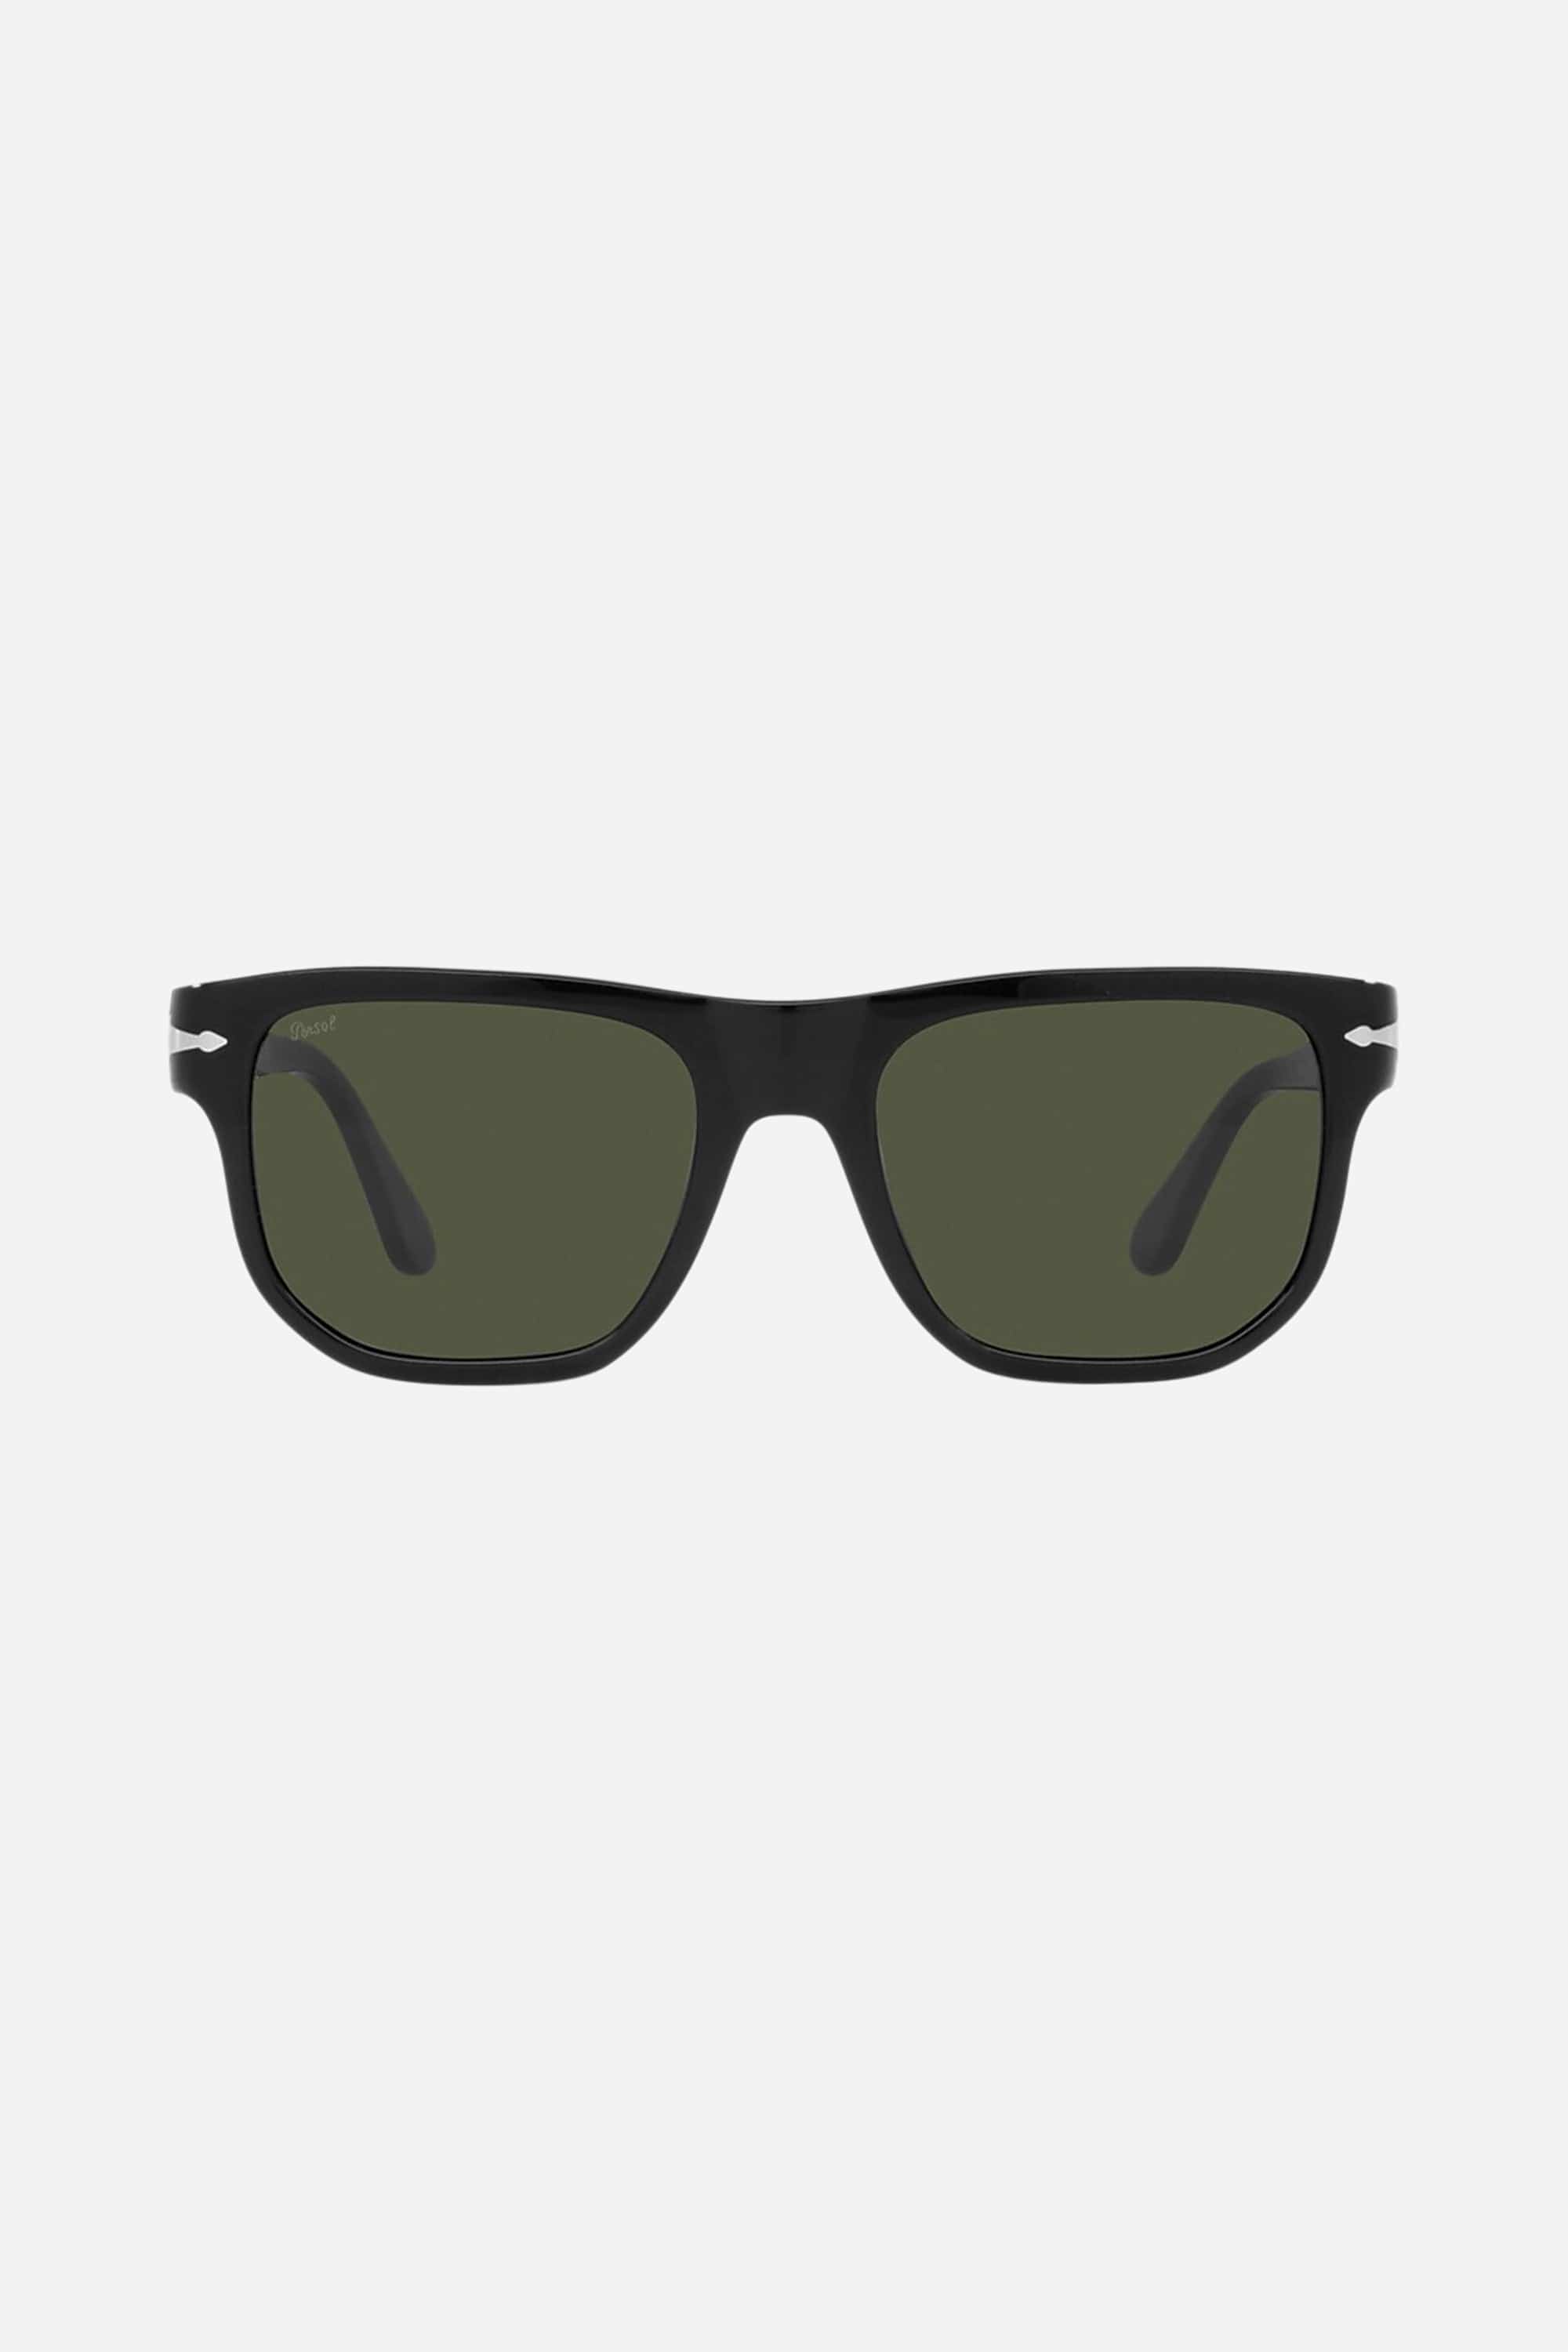 Persol black wayfarer sunglasses - Eyewear Club